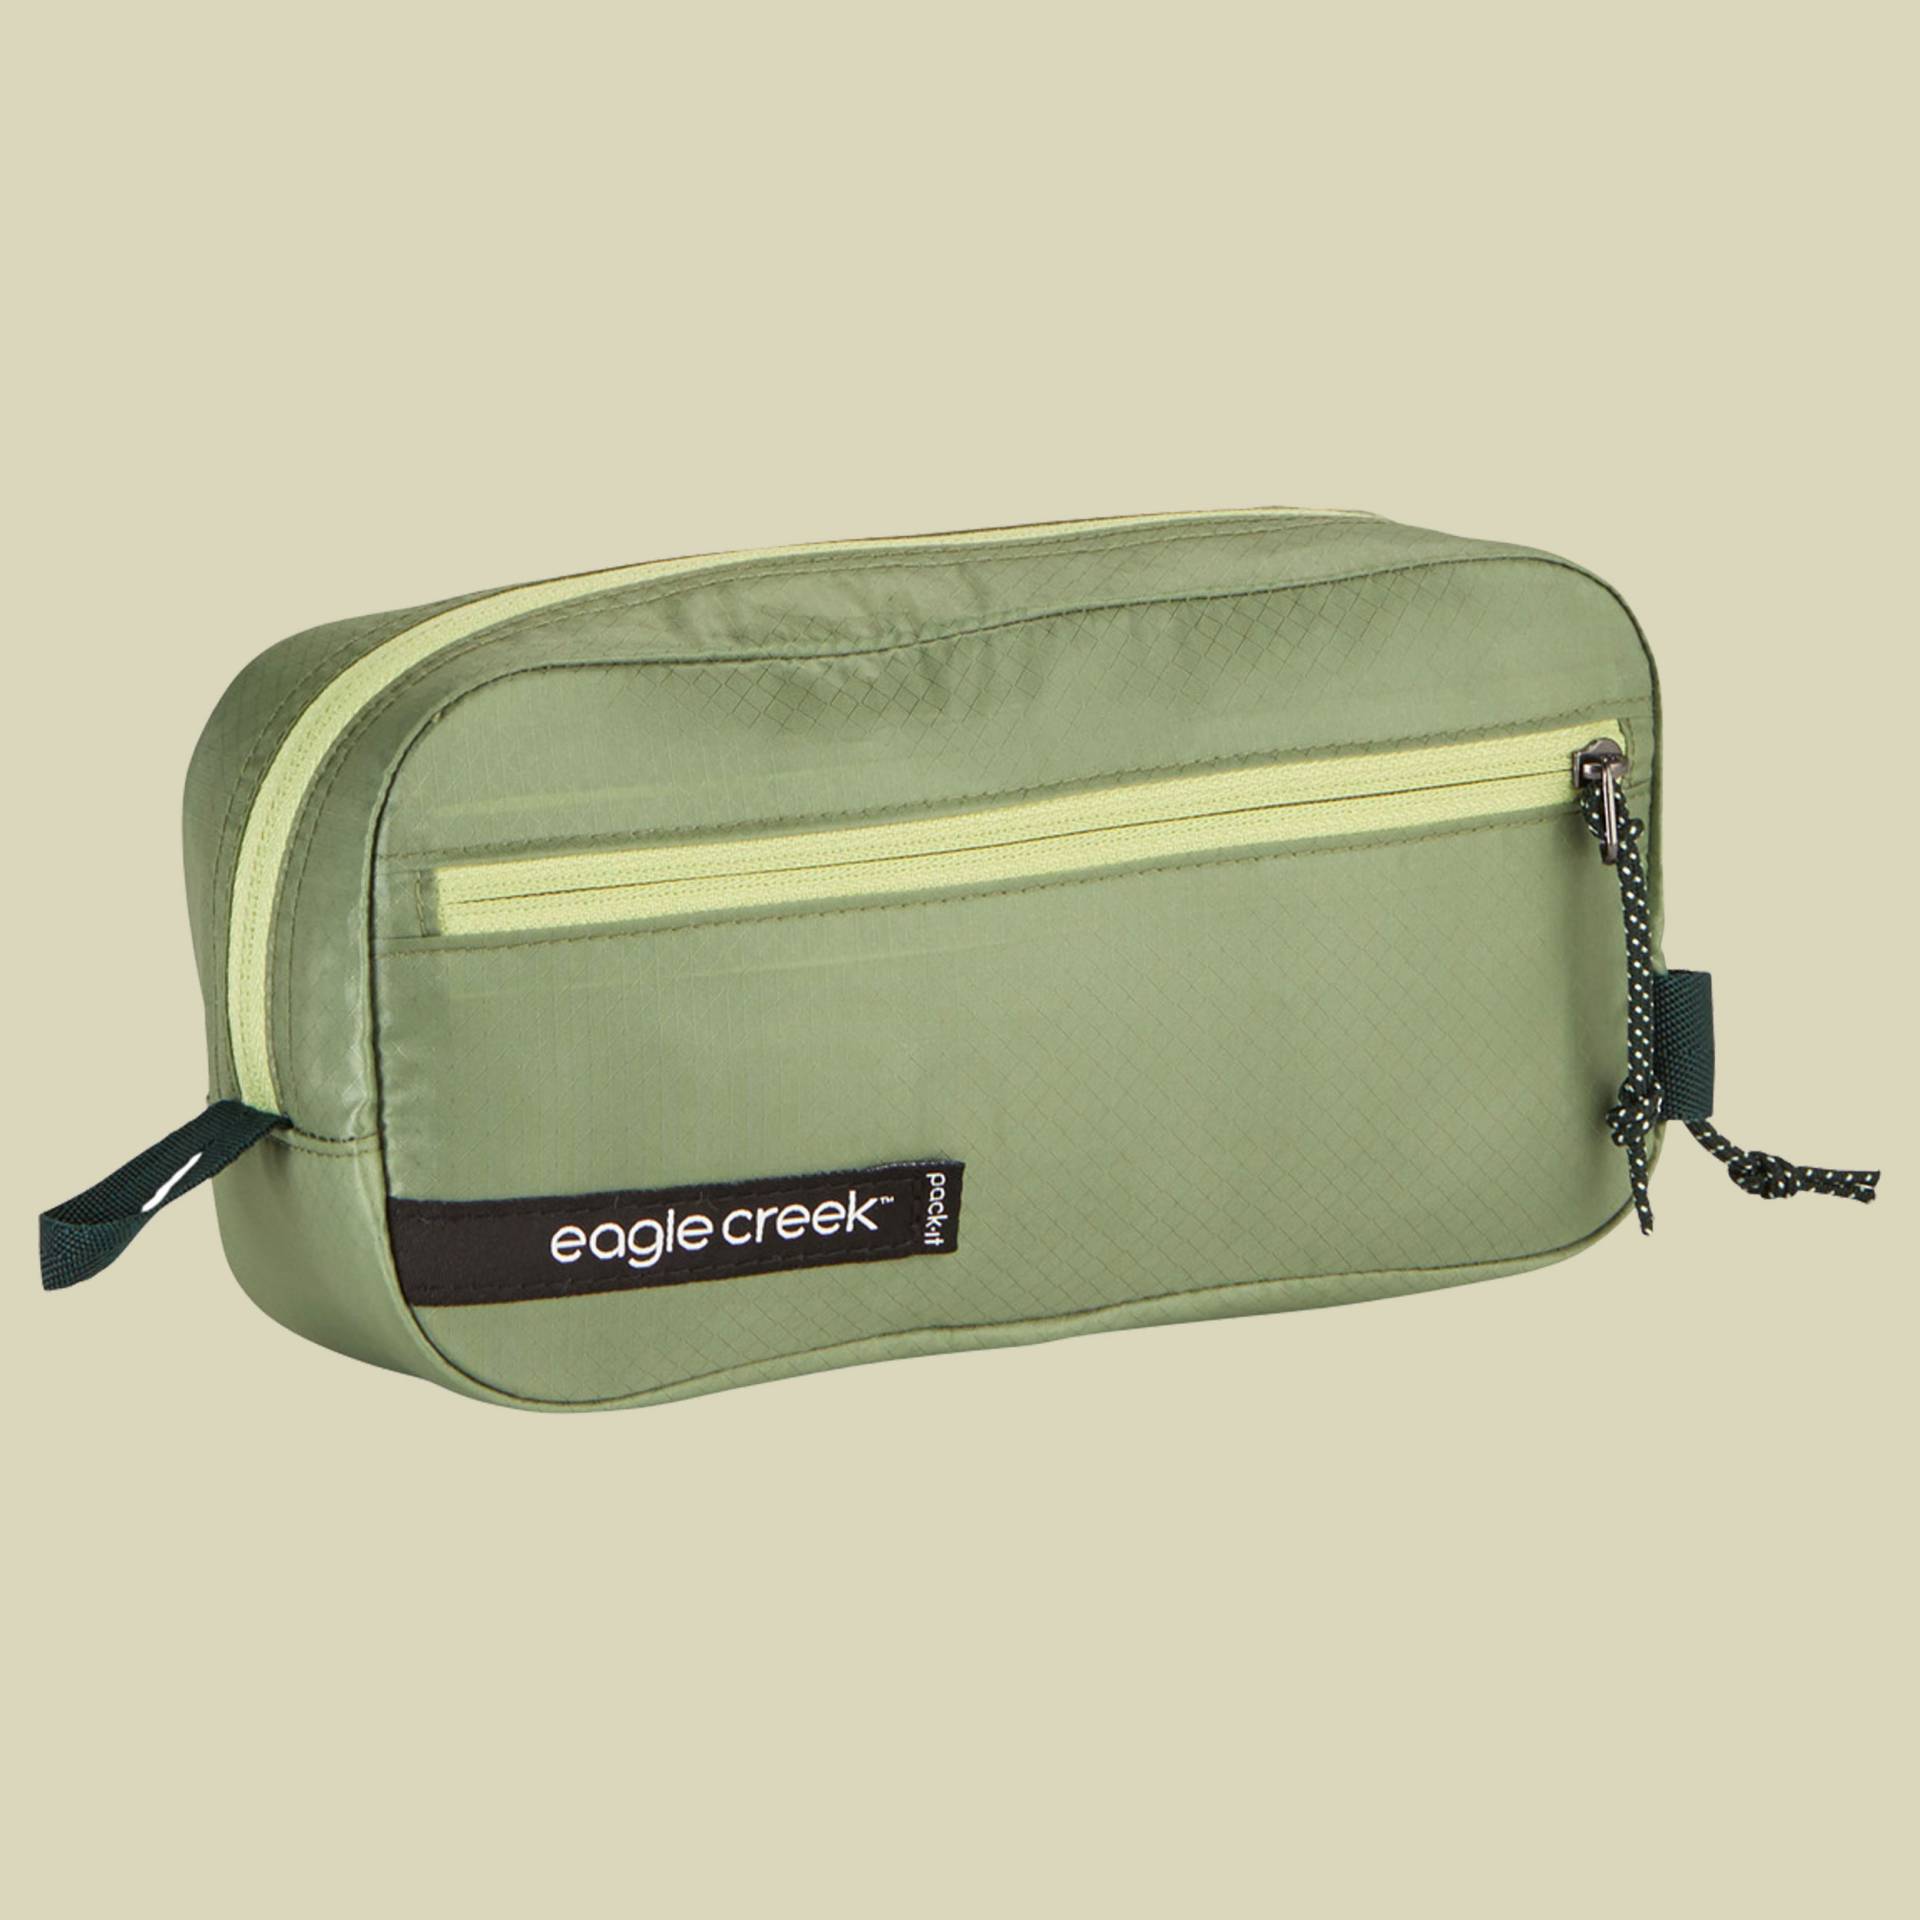 Pack-It Isolate Quick Trip Größe XS Farbe mossy green von Eagle Creek